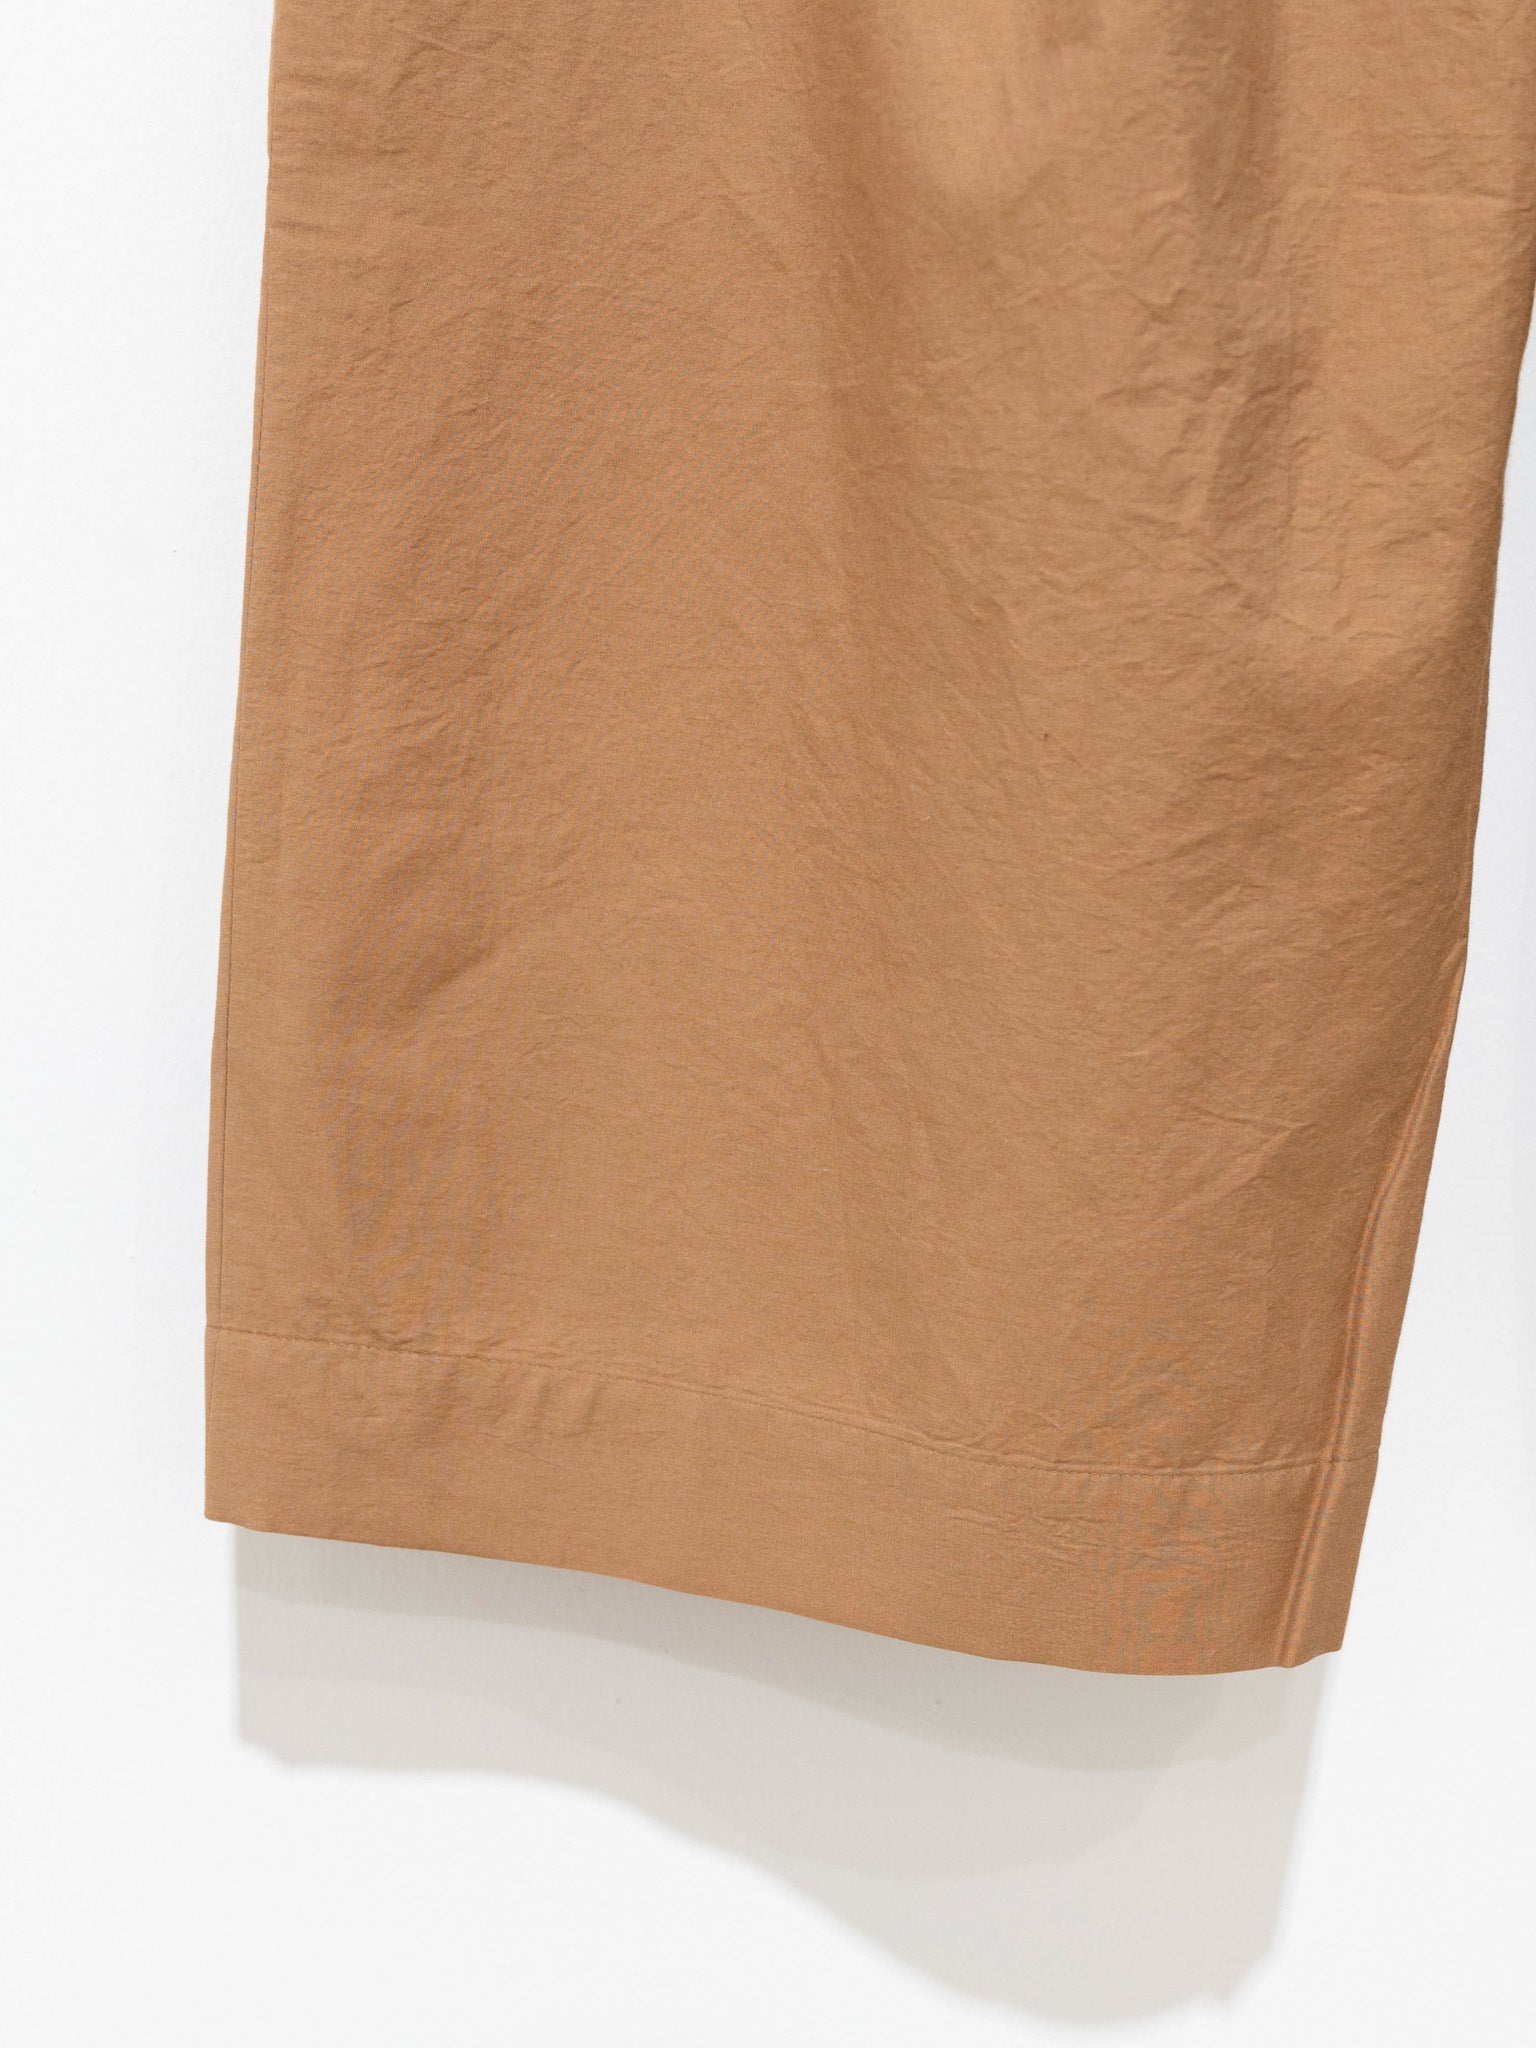 Namu Shop - Veritecoeur Shirring Easy Pants - Brown